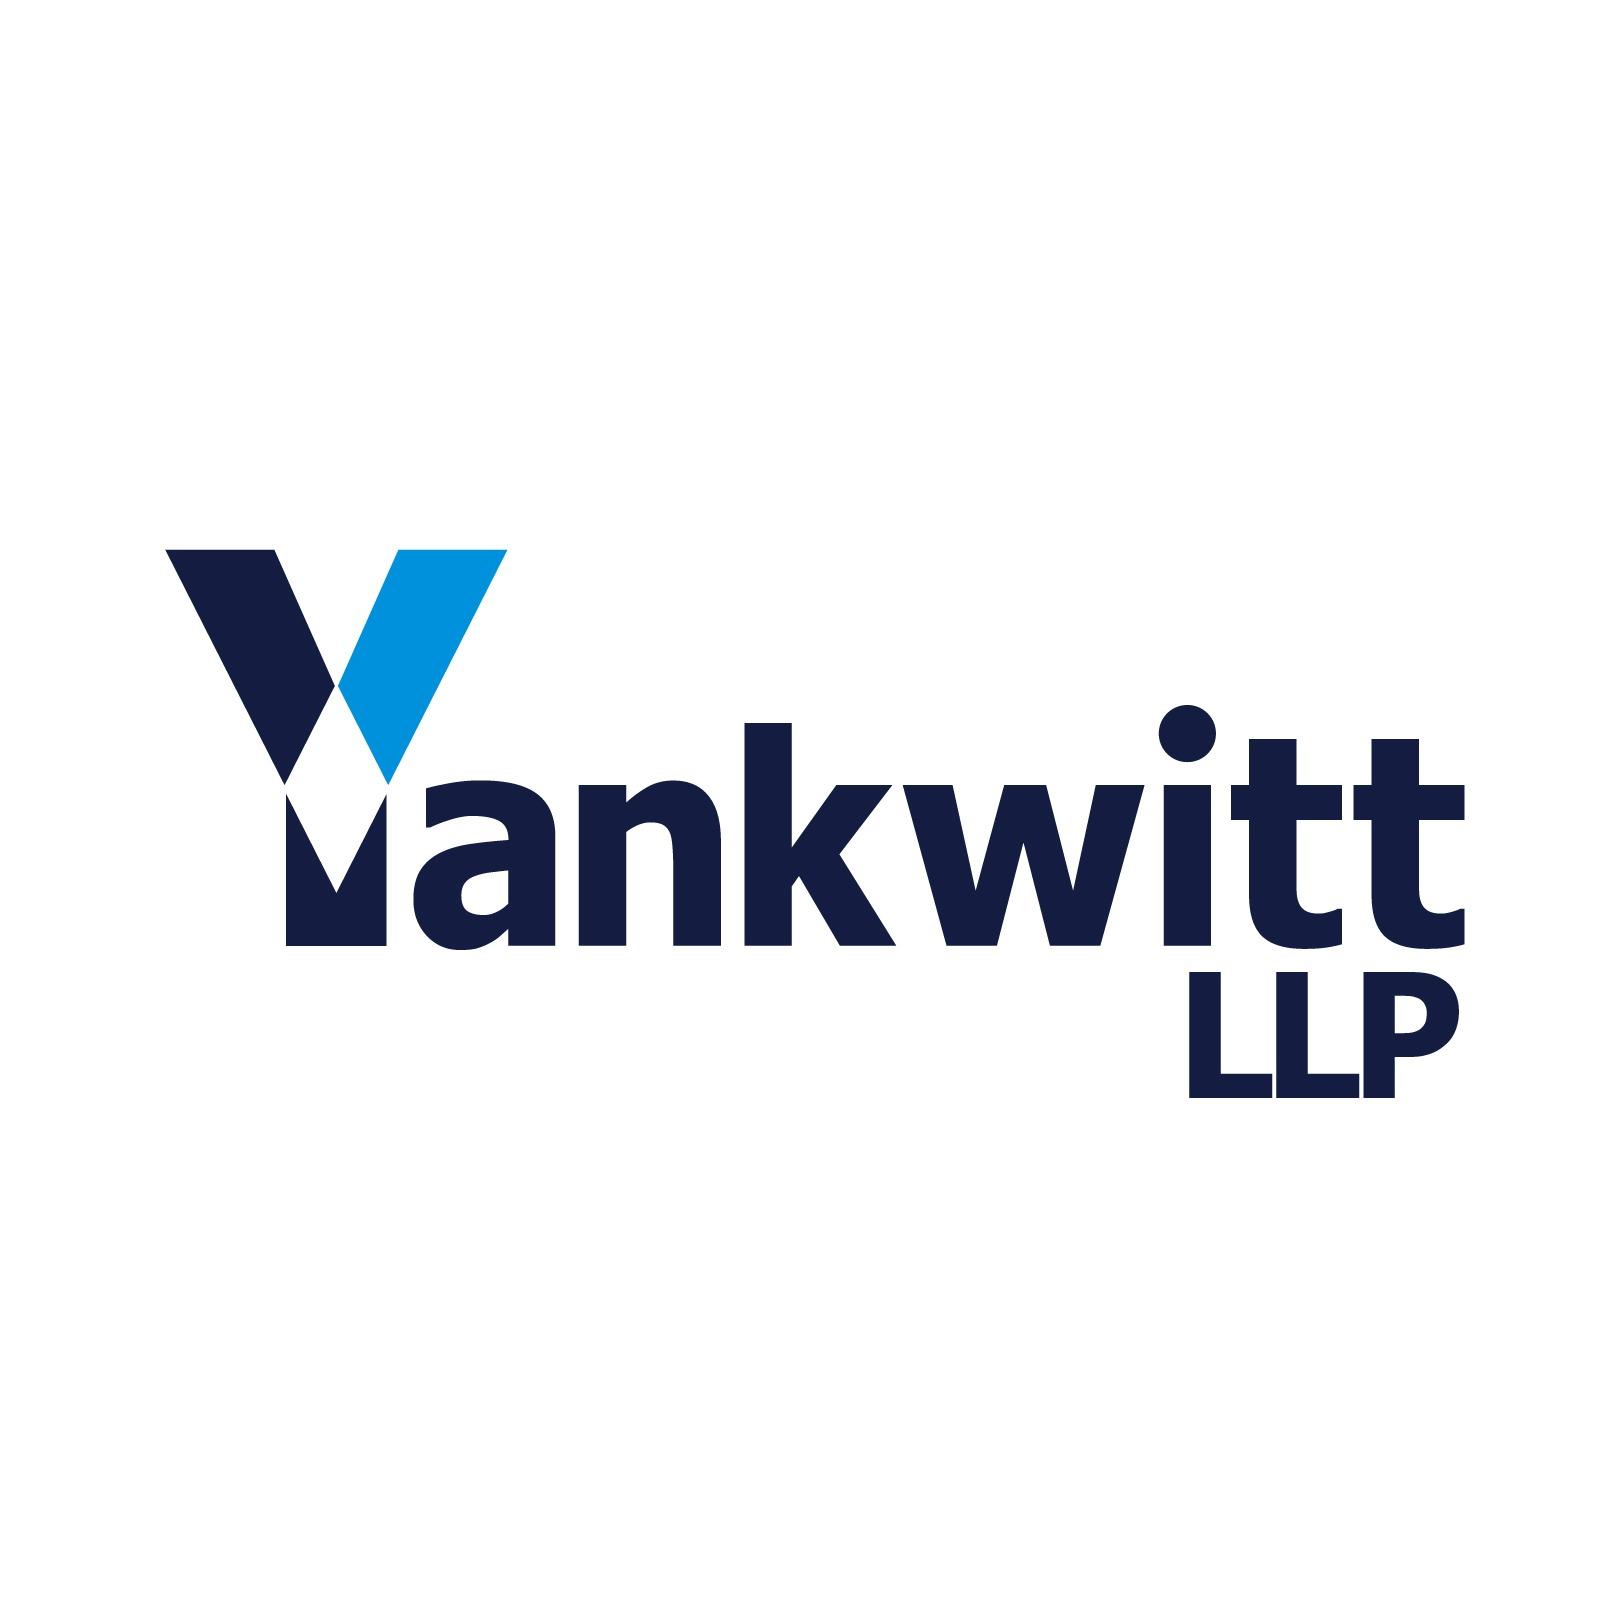 Yankwitt LLP Logo